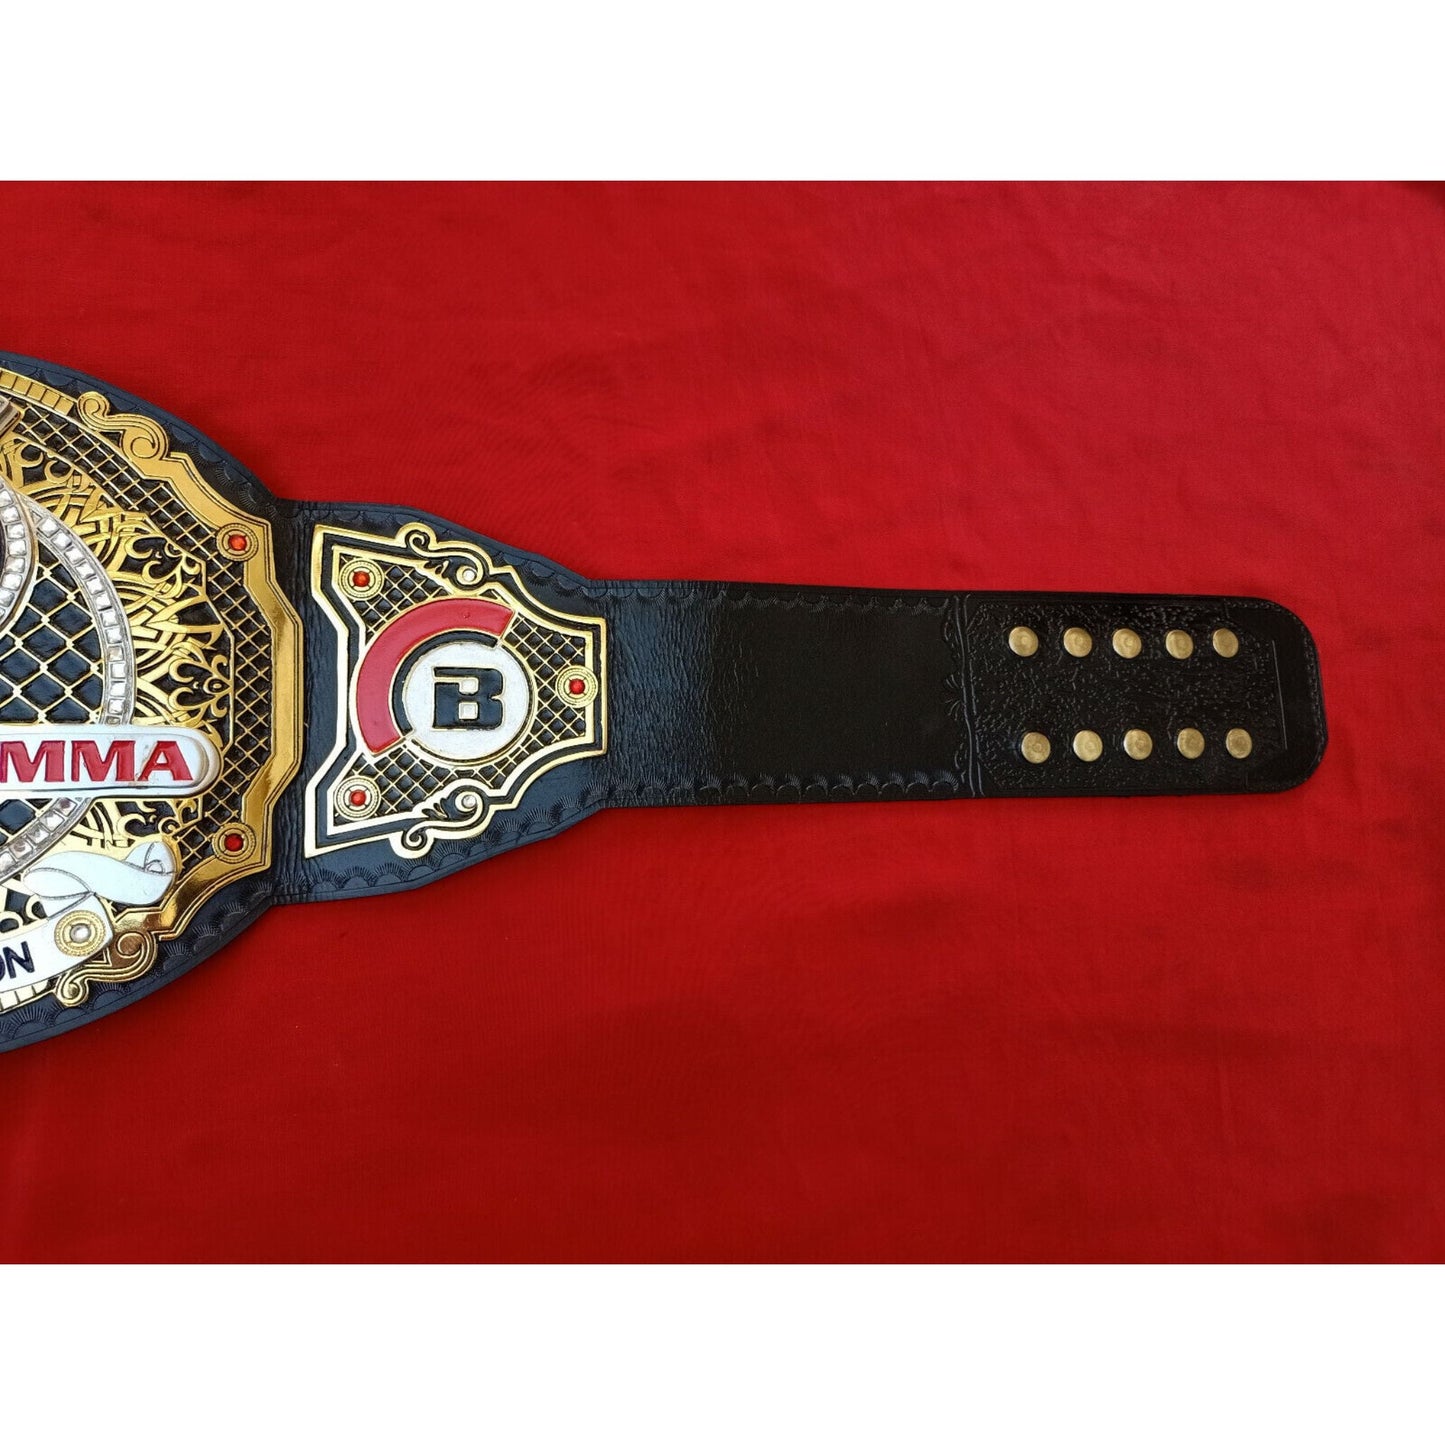 Bellator MMA World Heavyweight Championship Replica Title Belt